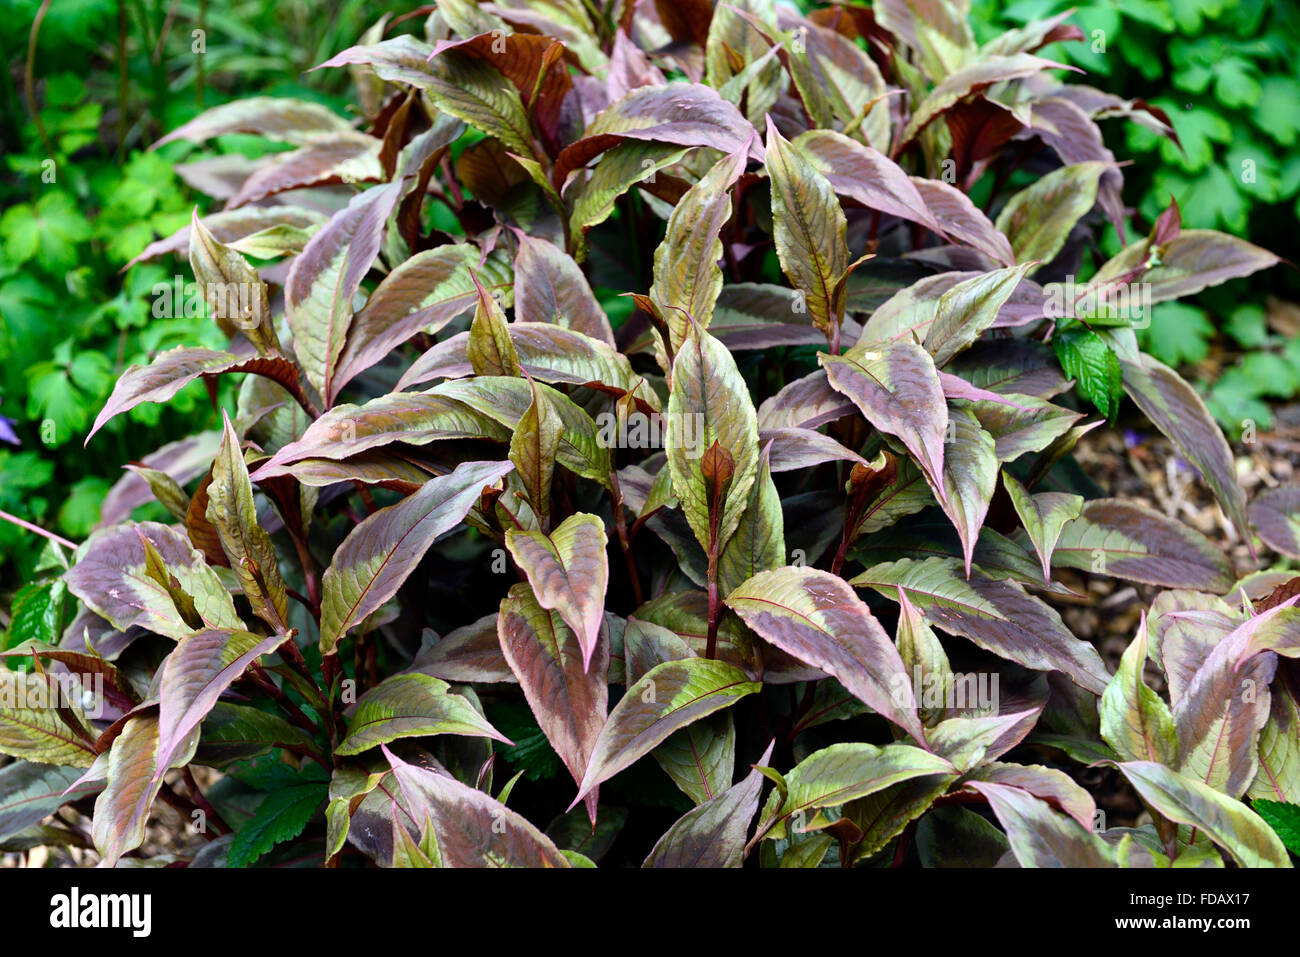 persicaria virginiana var filiformis compton's form purple green patterned foliage striking plant leaves perennial Stock Photo